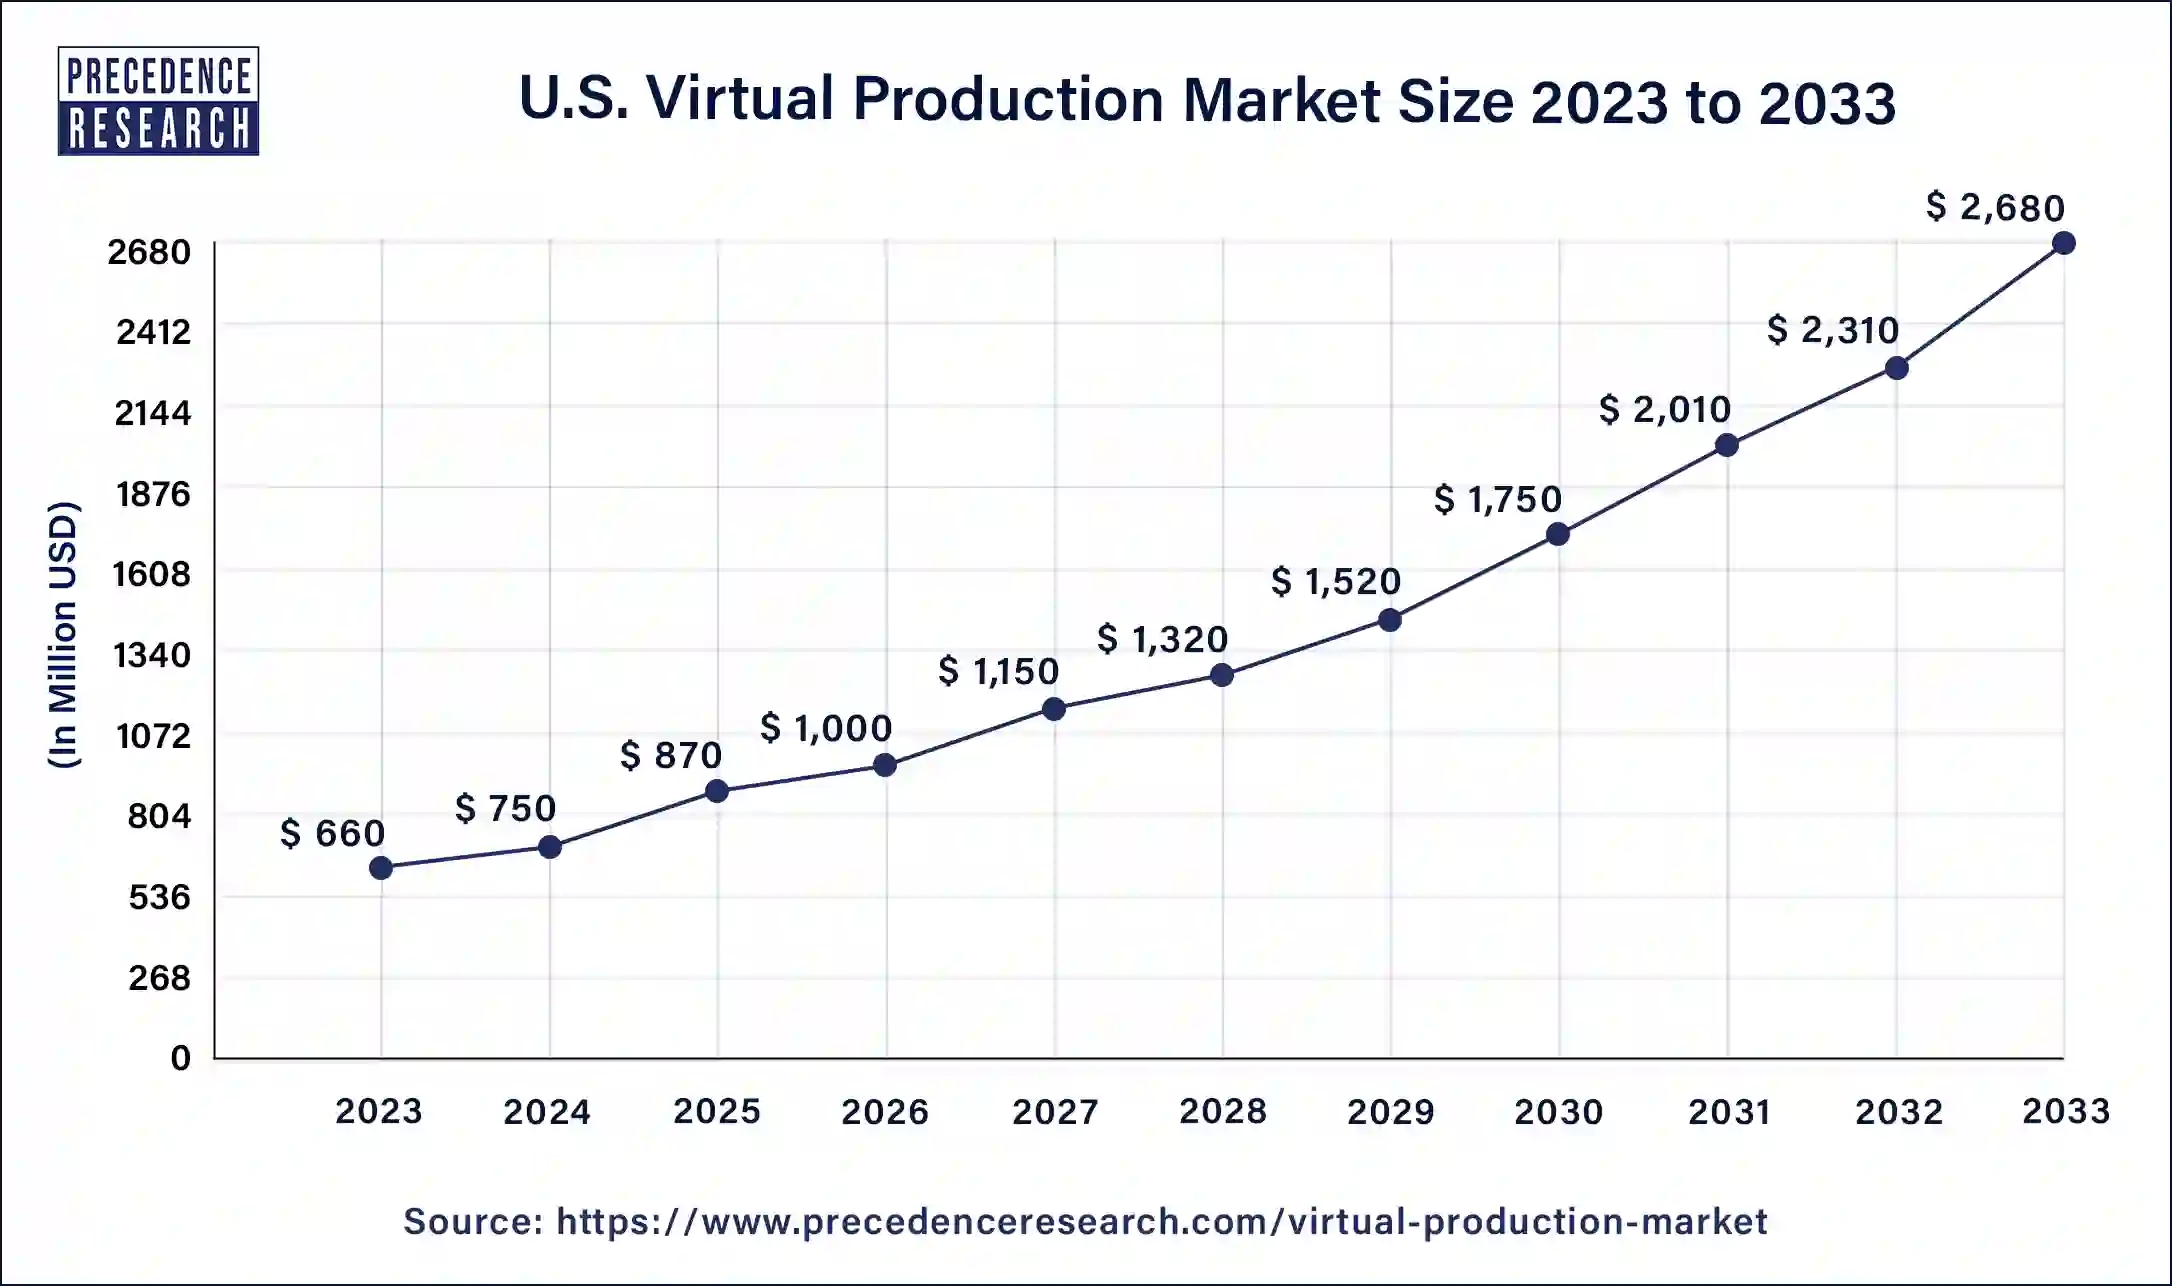 U.S. Virtual Production Market Size 2024 to 2033